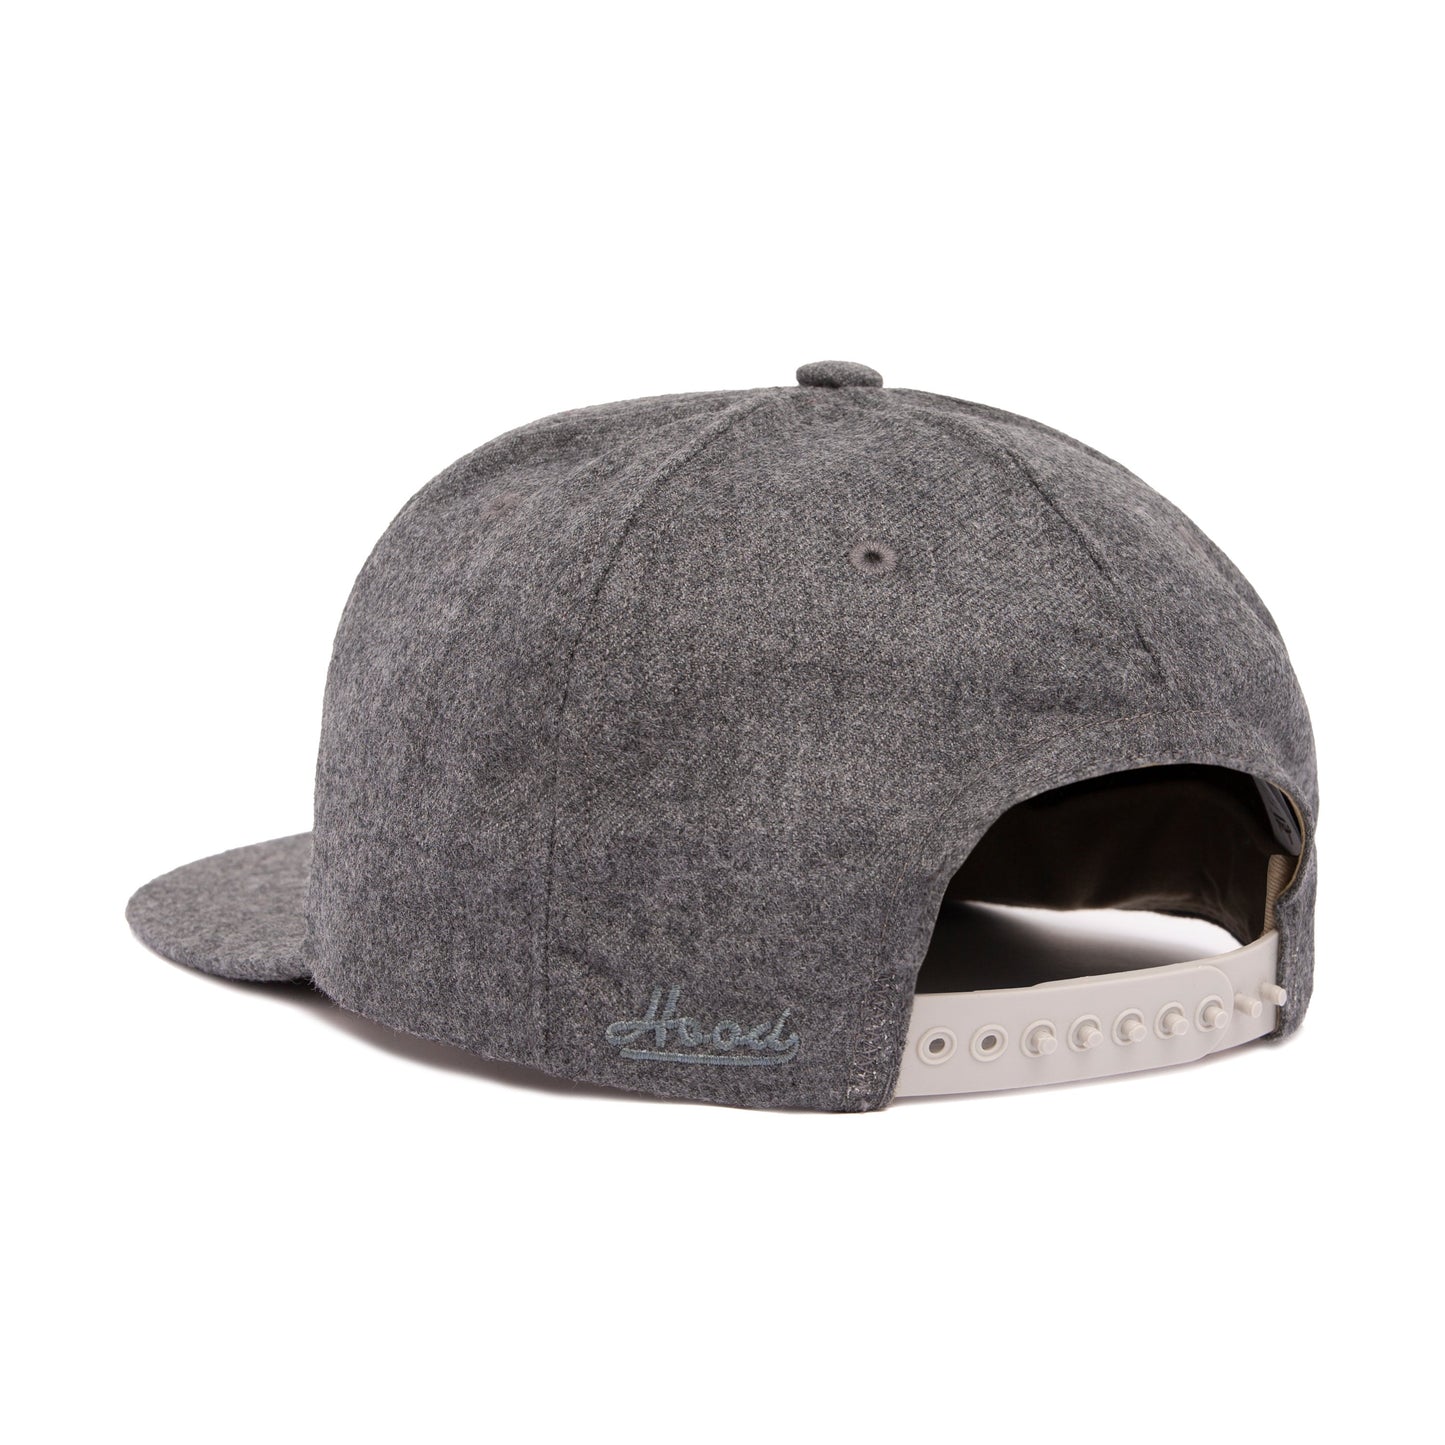 Williamsburg Snapback Hat